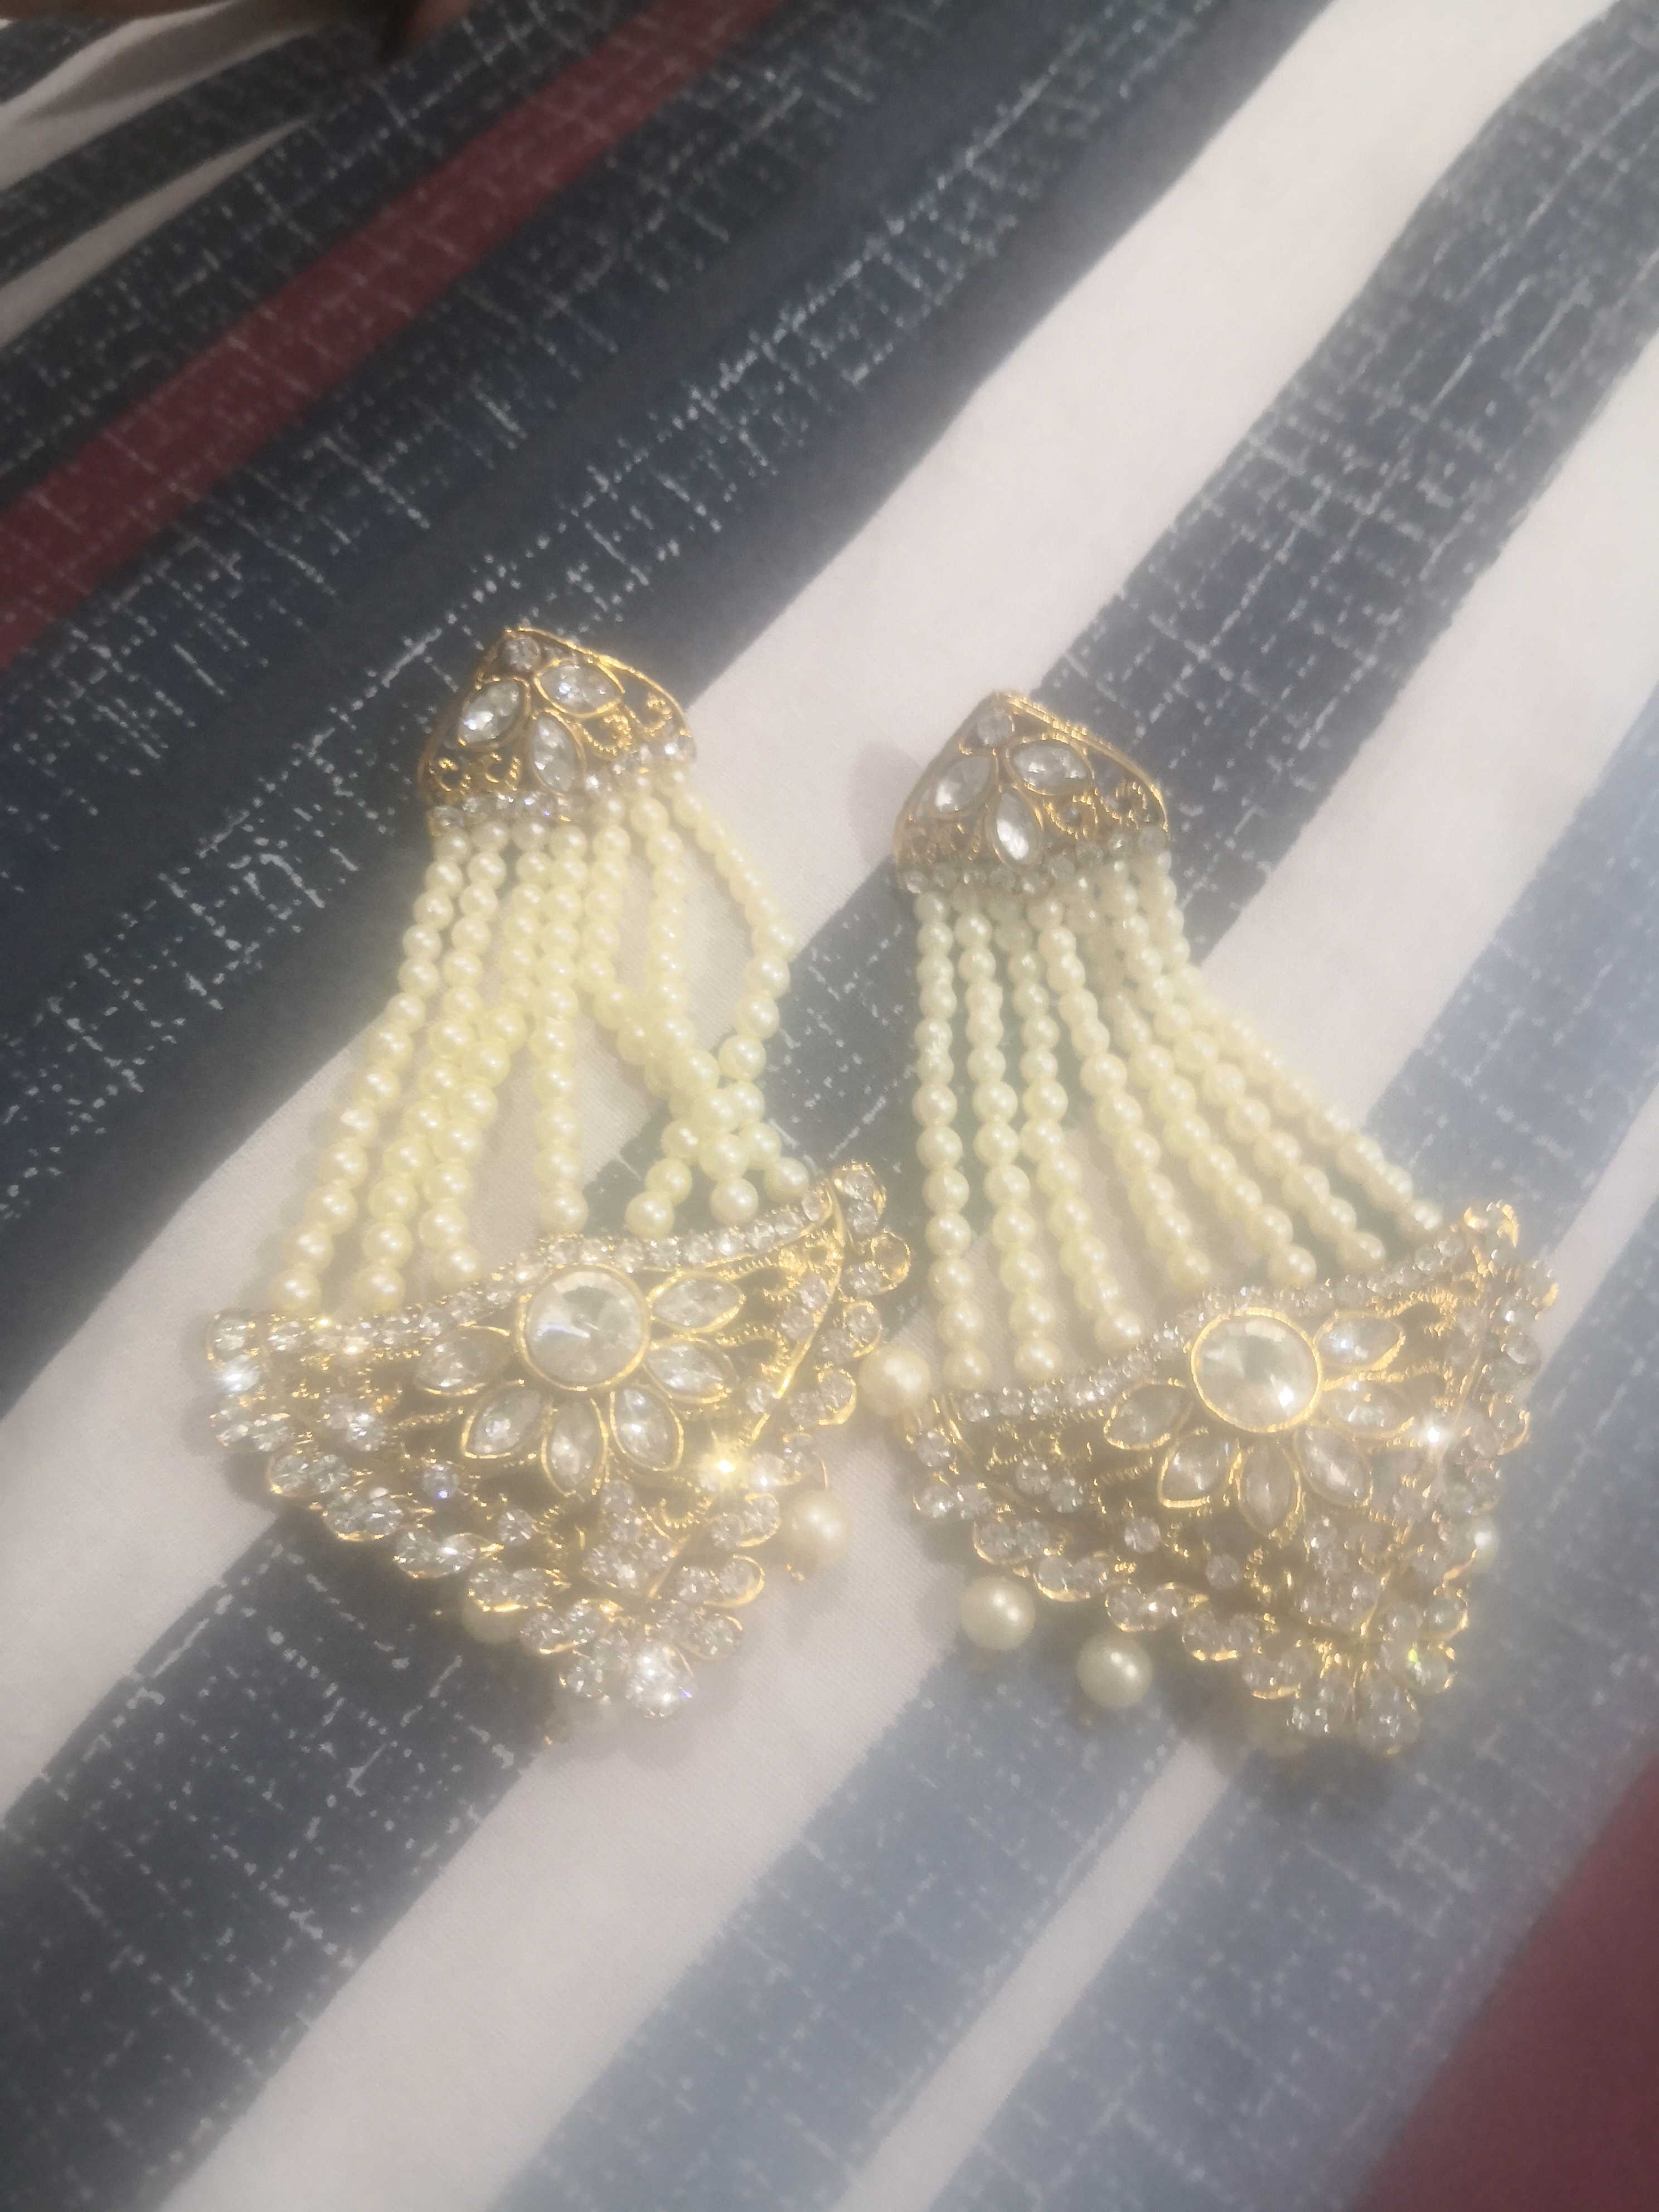 Elegant, traditional style earrings